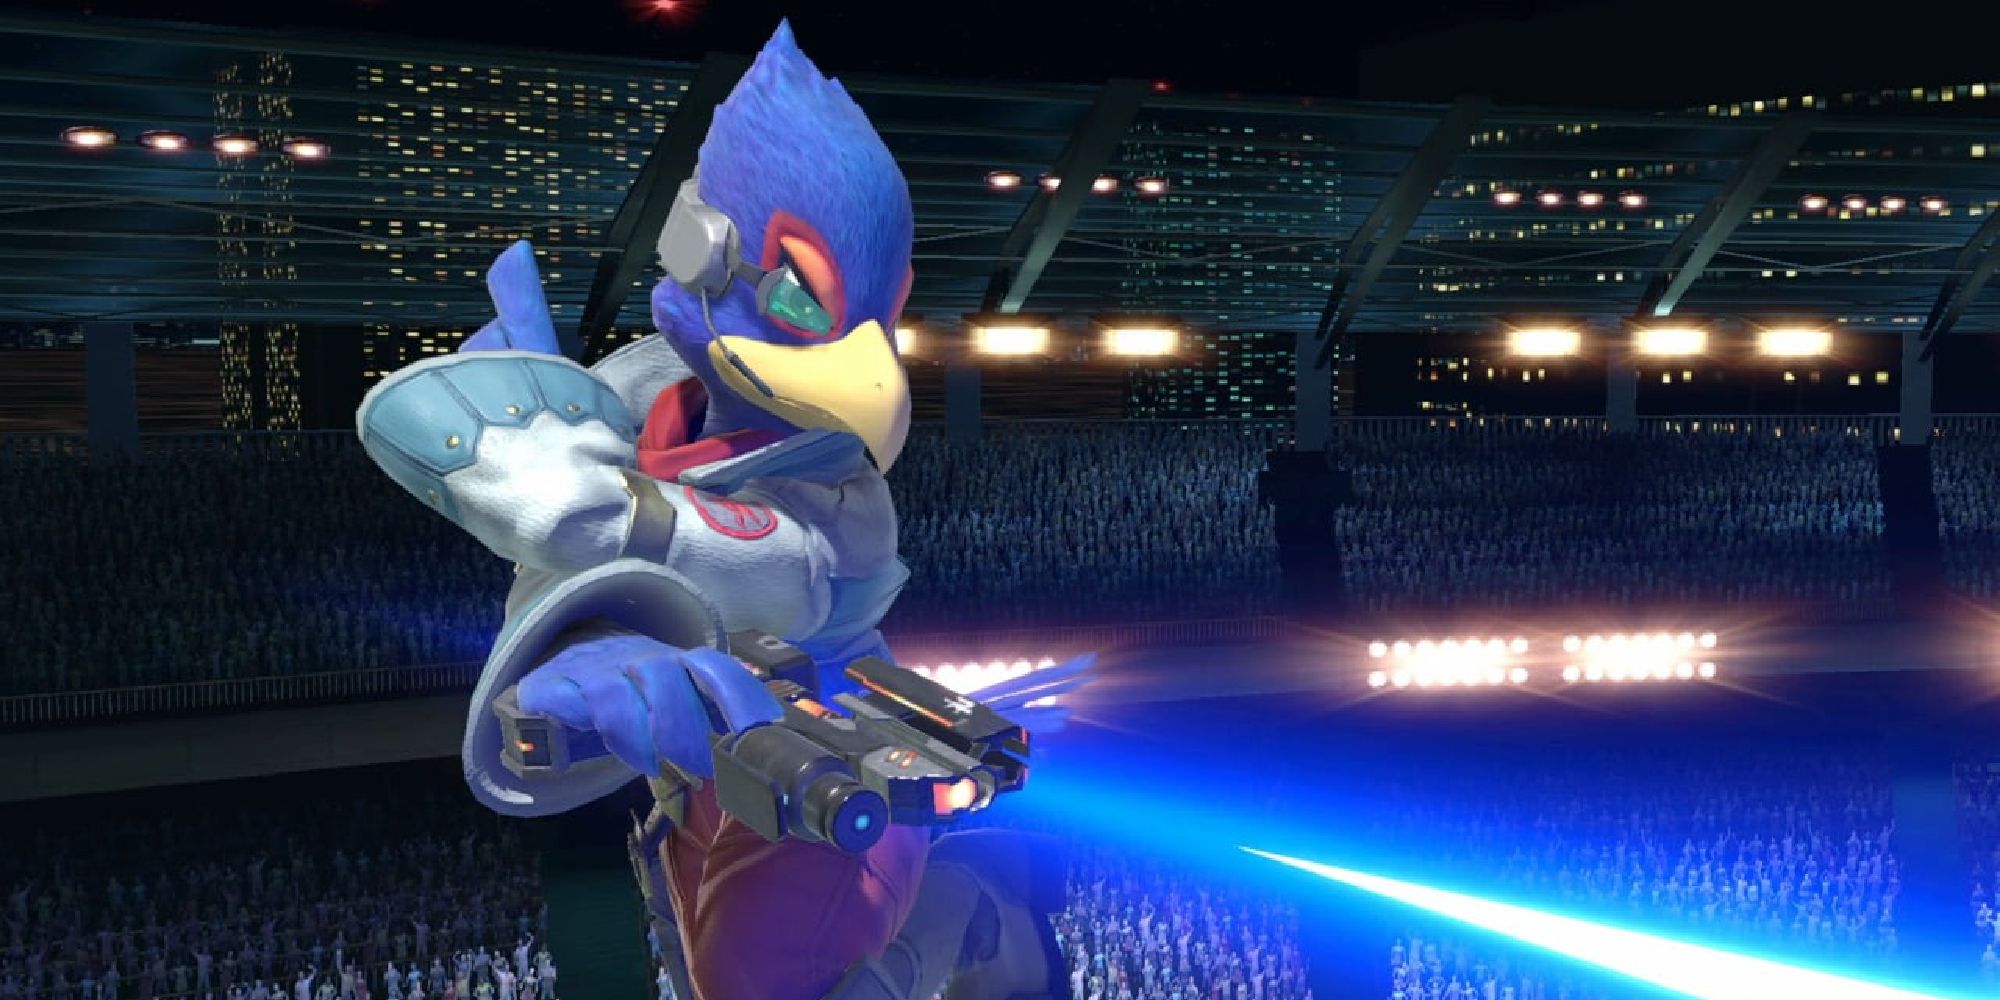 Falco firing his blaster